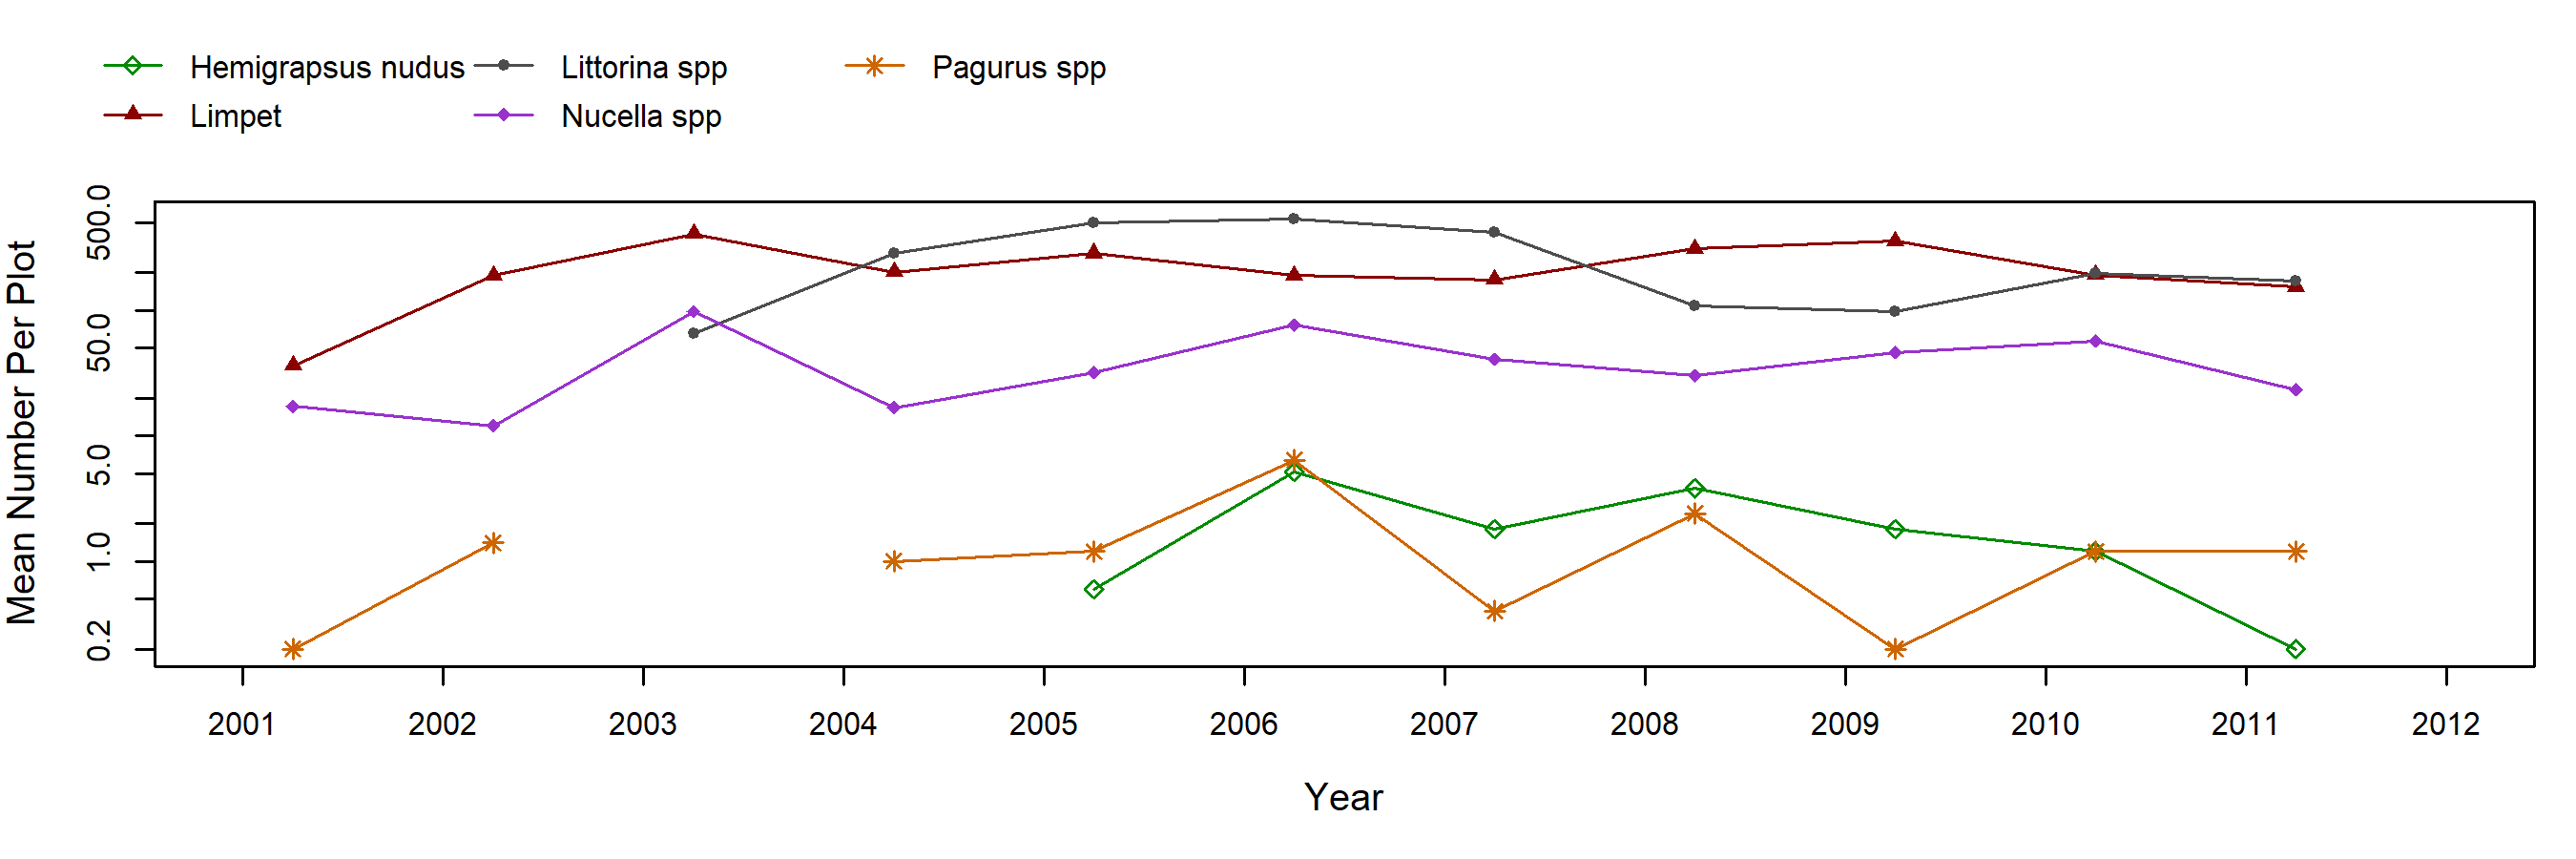 Ecola Mytilus trend plot